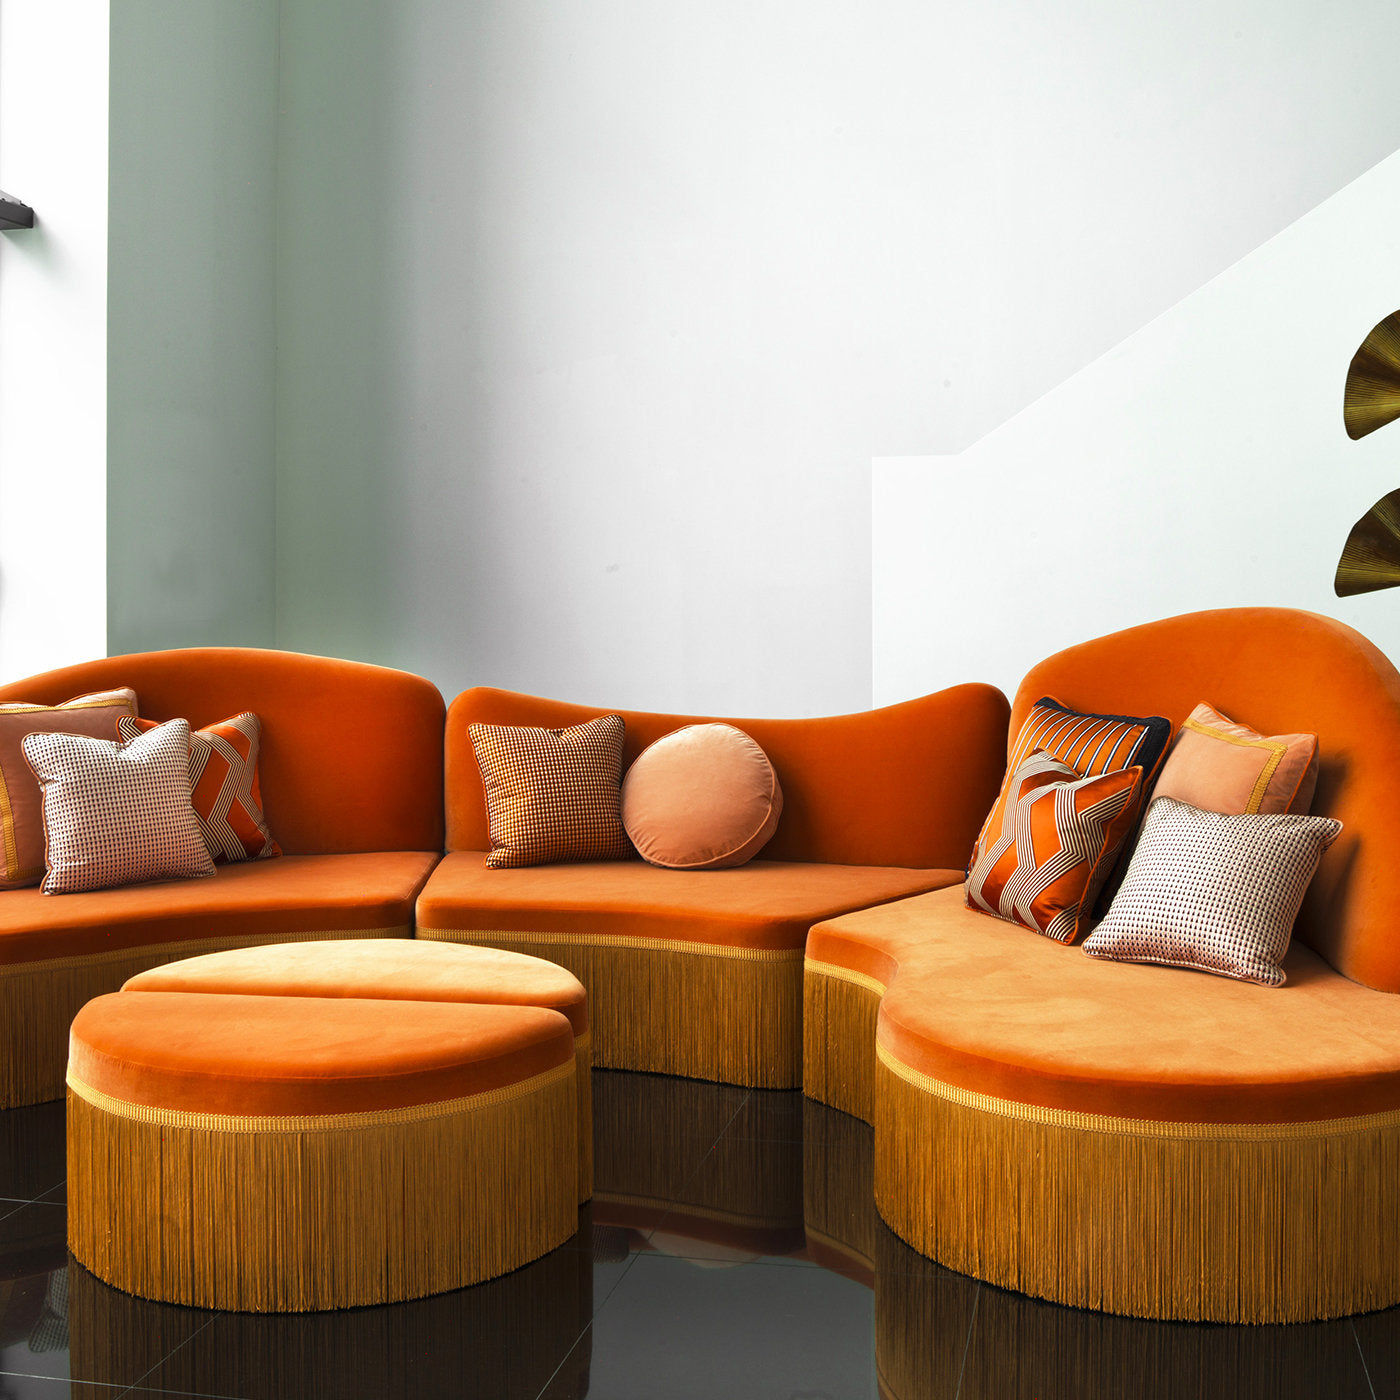 Wave Orange 3-Piece Sectional Sofa #2 - Alternative view 3